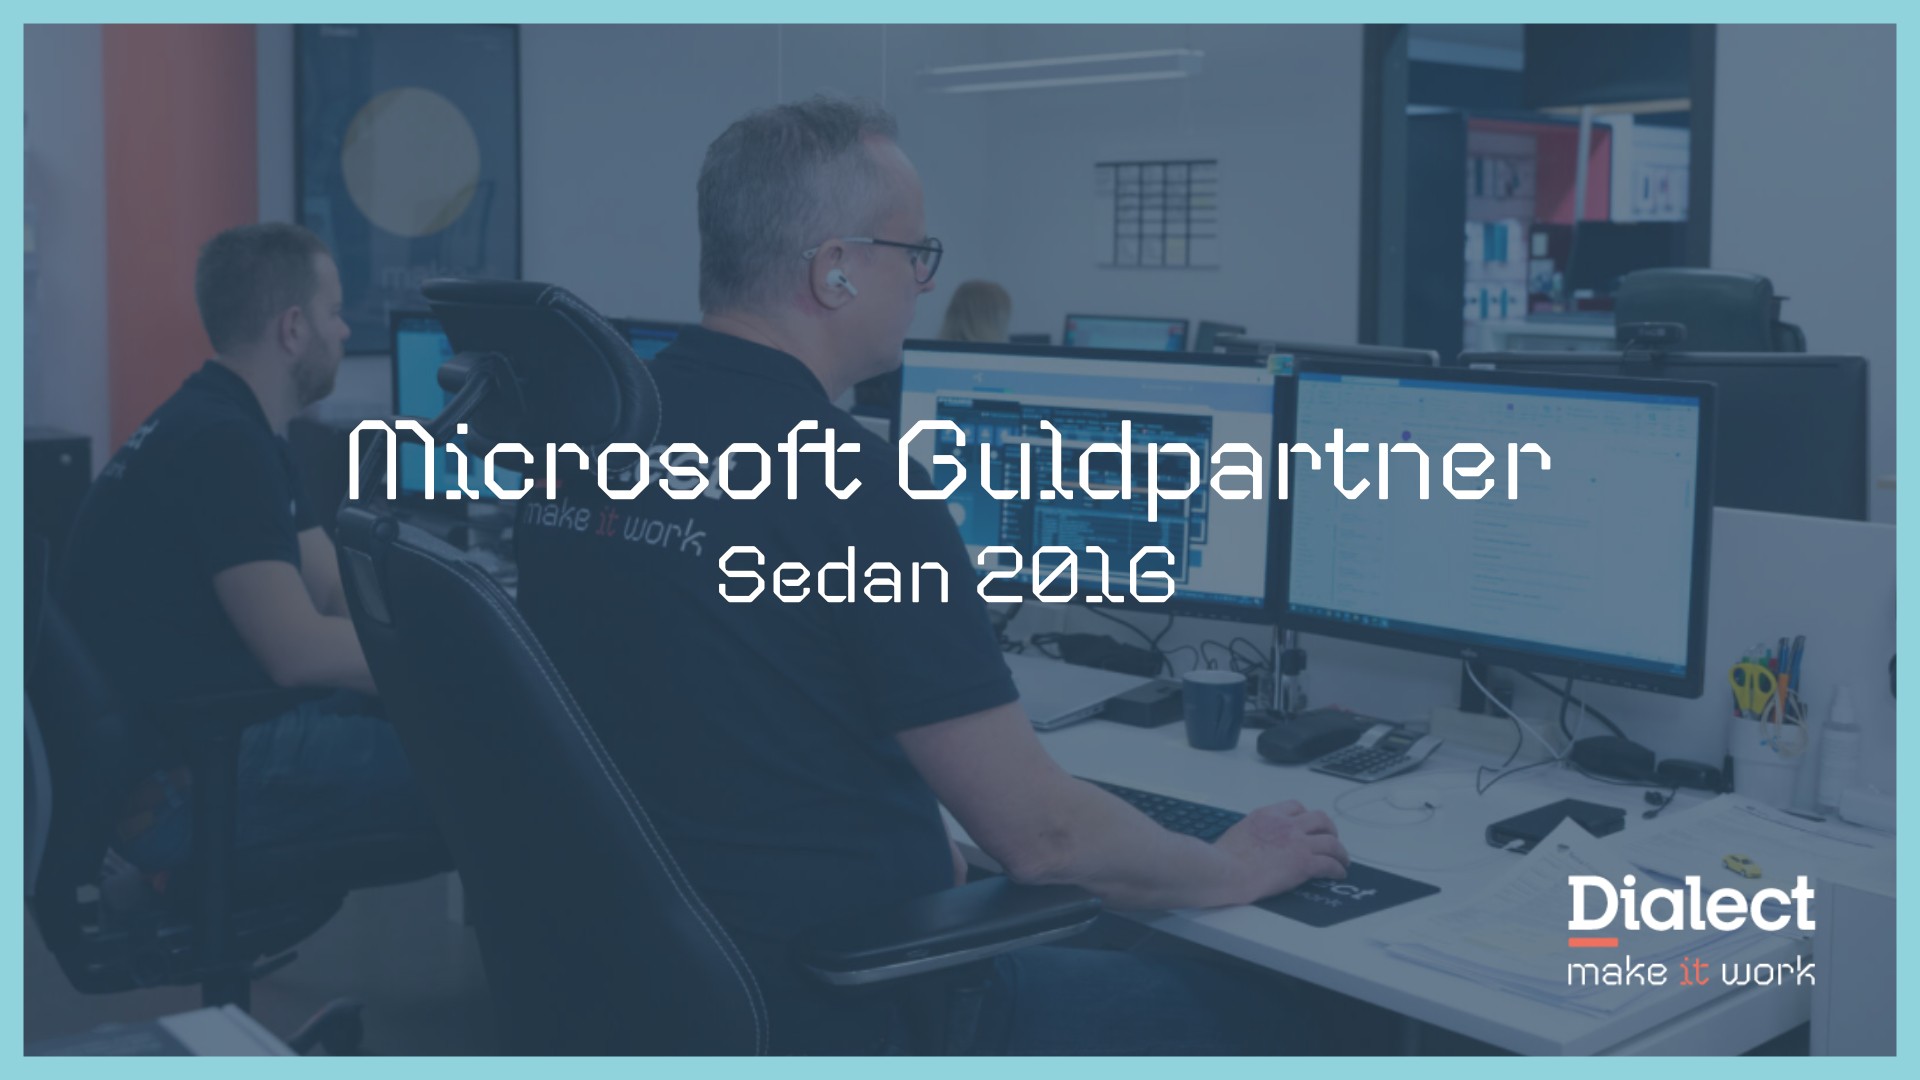 Dialect Sverige - Microsoft Guldpartner sedan 2016